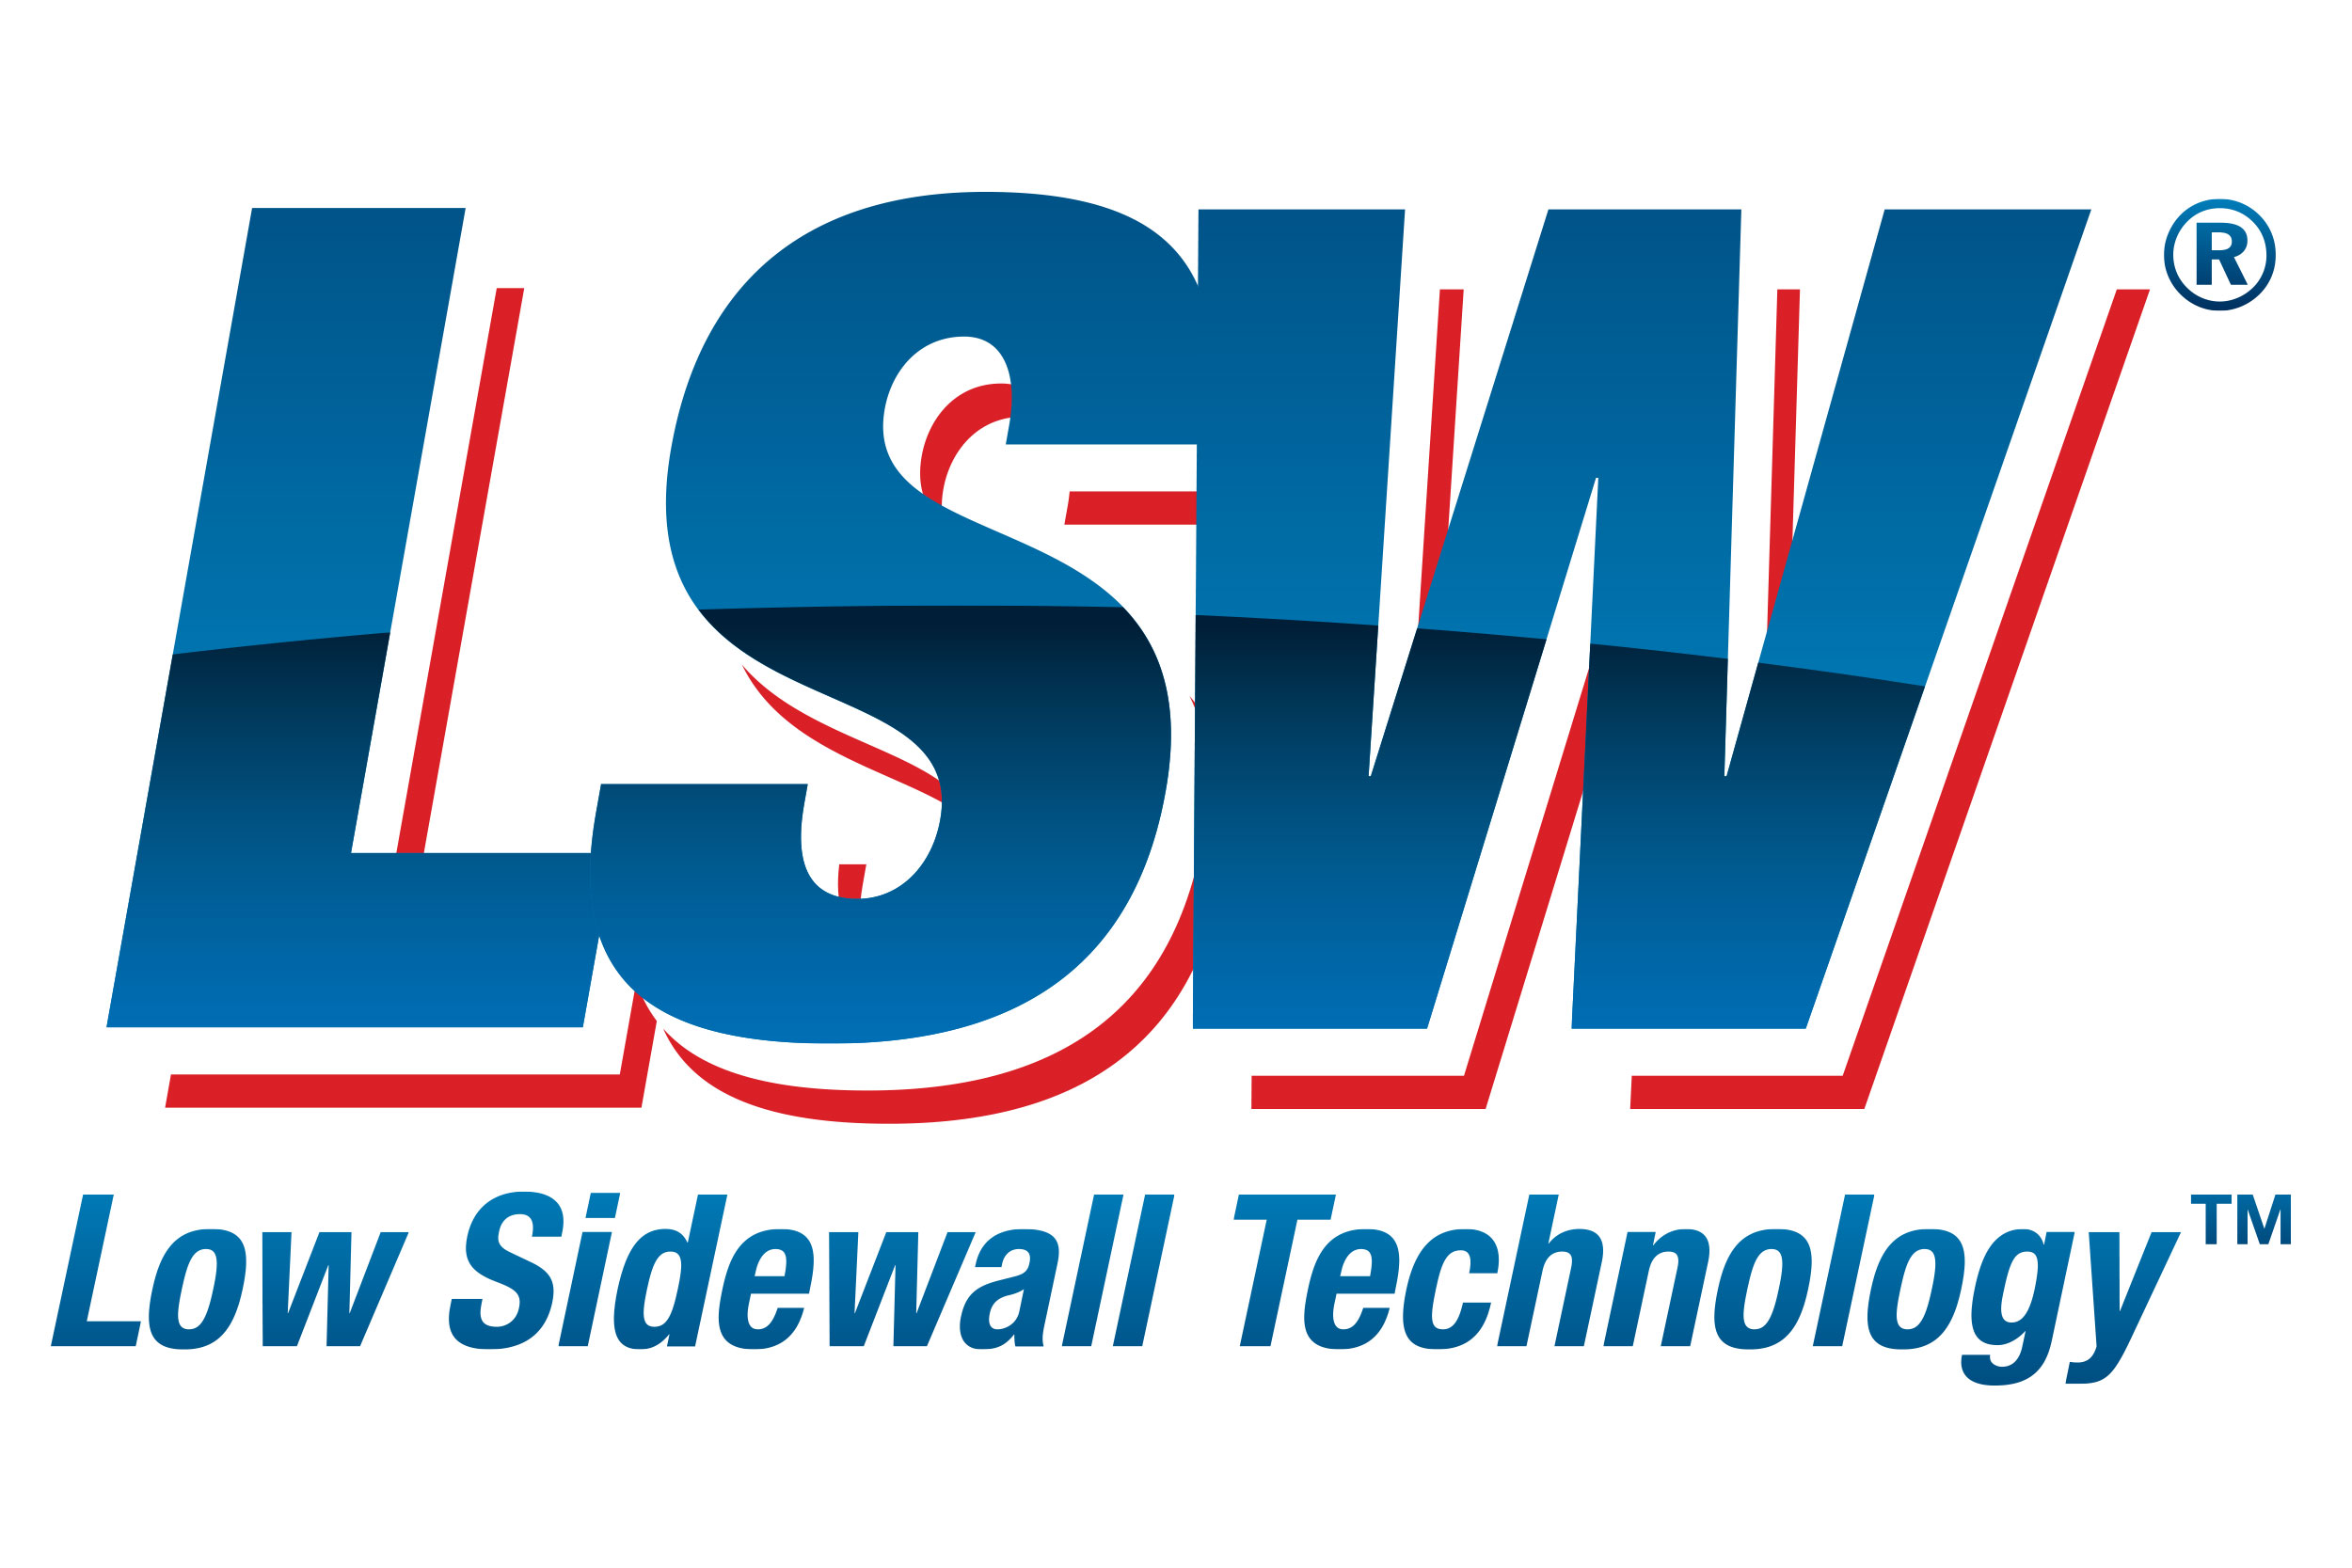 Low Sidewall Technology